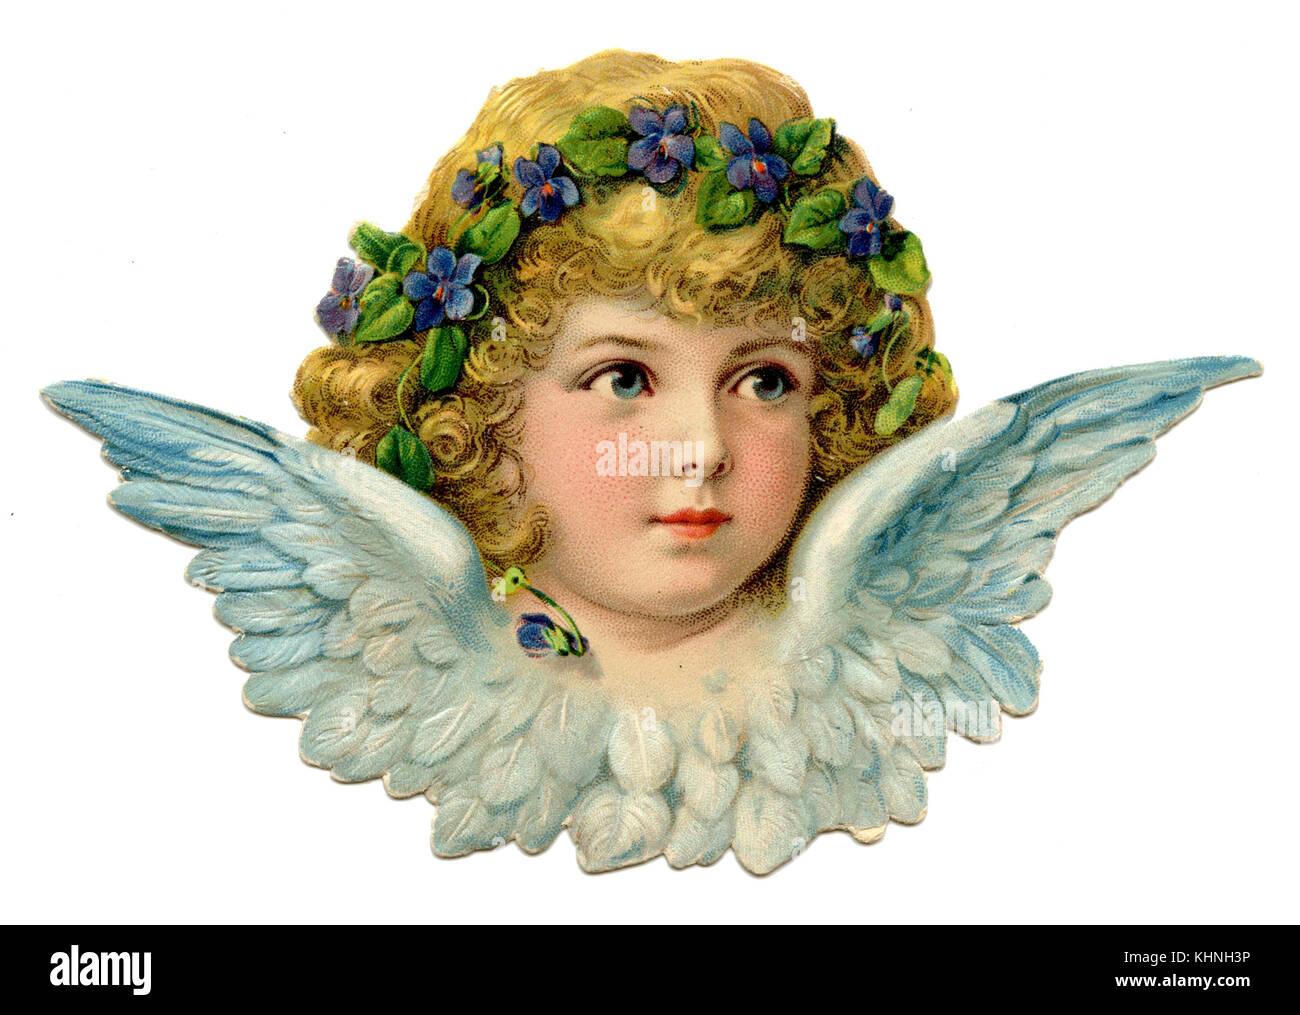 scrap: angel face, light blue (Glanzbild, Oblate: Engelsgesicht, hellblau) Stock Photo